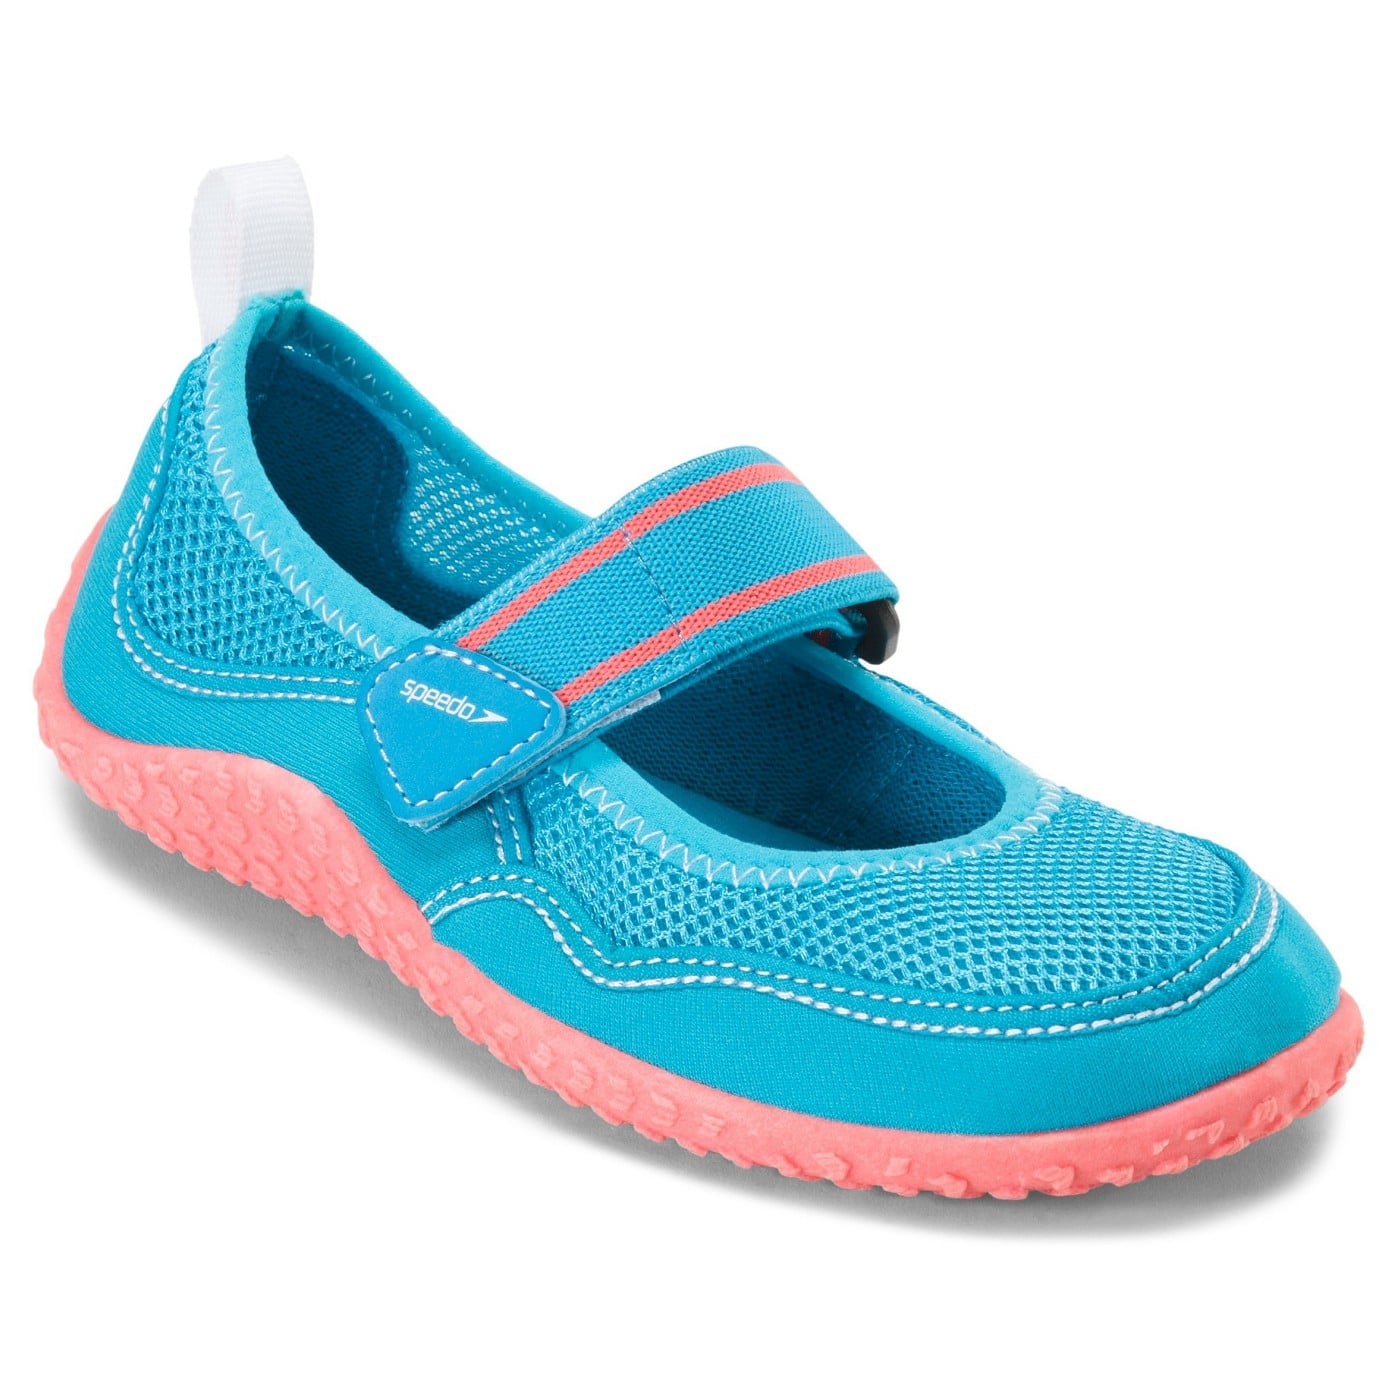 Mary Jane Water Shoes Kids Girls Swim Shoes Black/Pink Size Medium 7-8 Details about   Speedo 